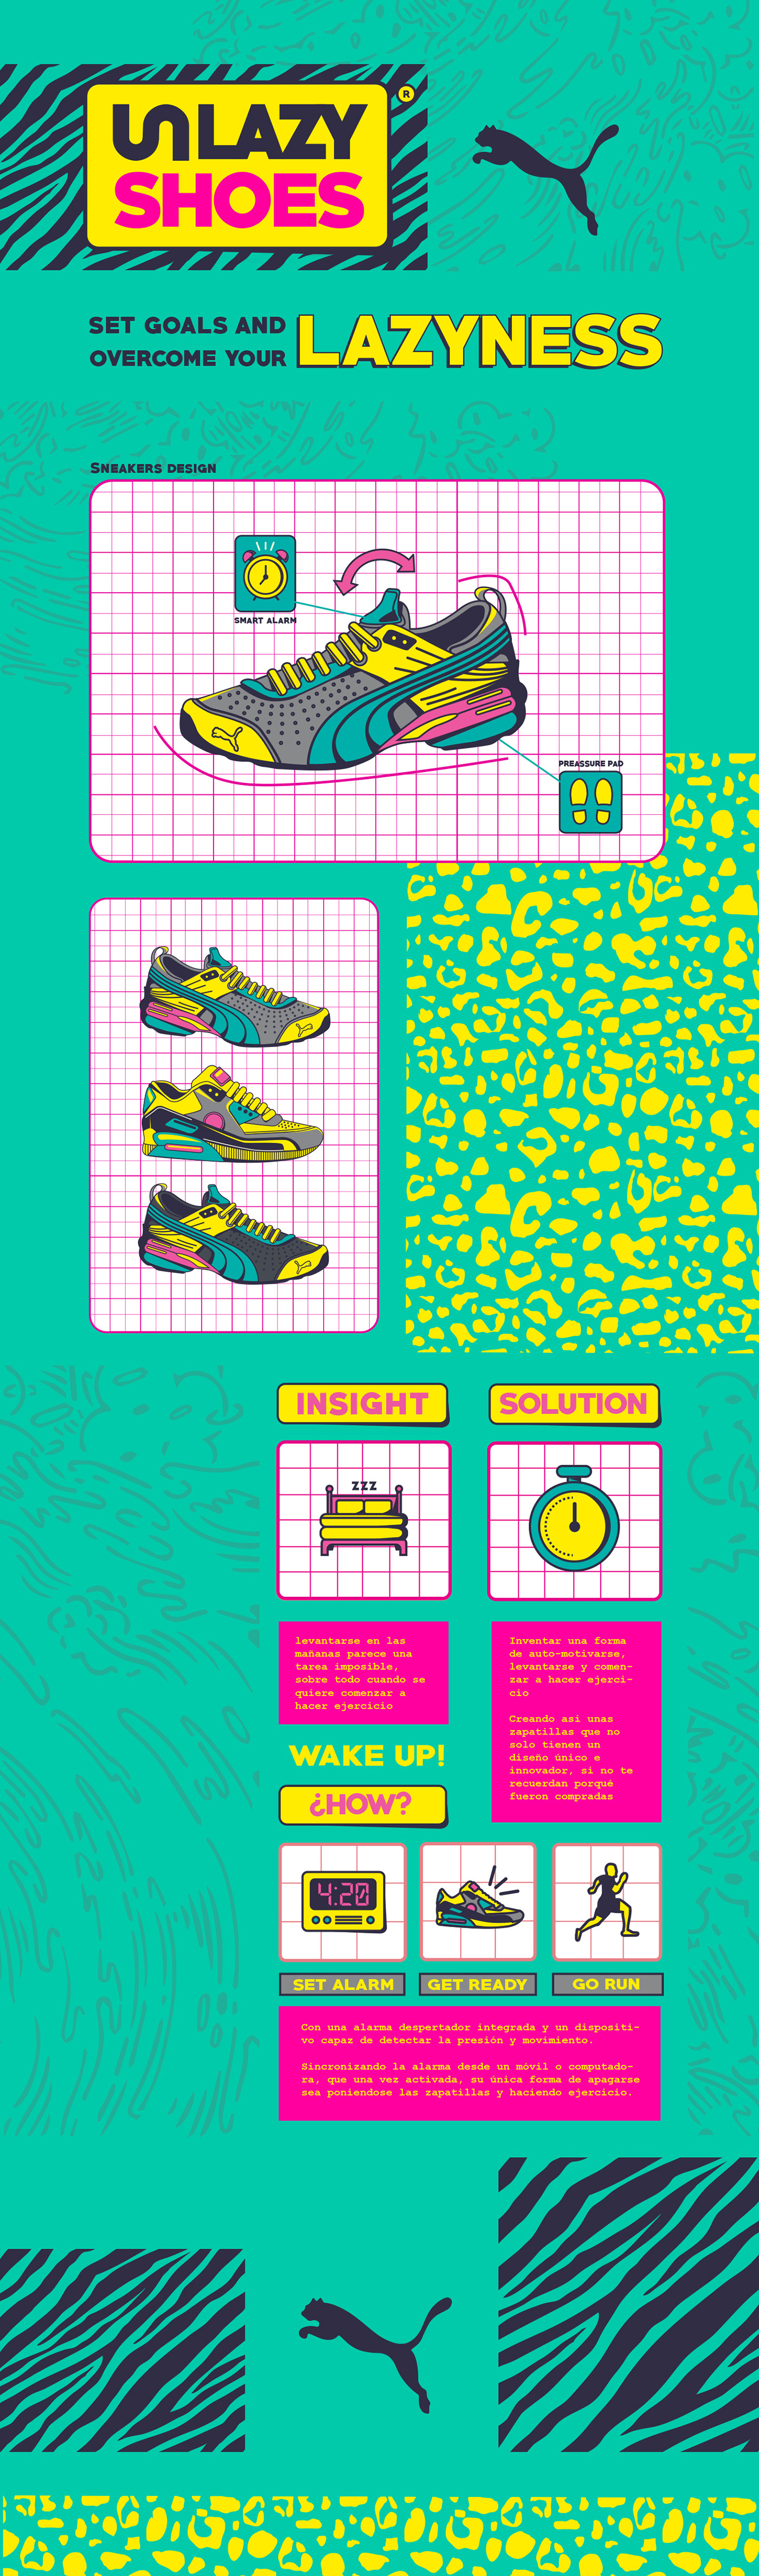 sneakers shoes lazy idea colors zebra puma Nike adidas